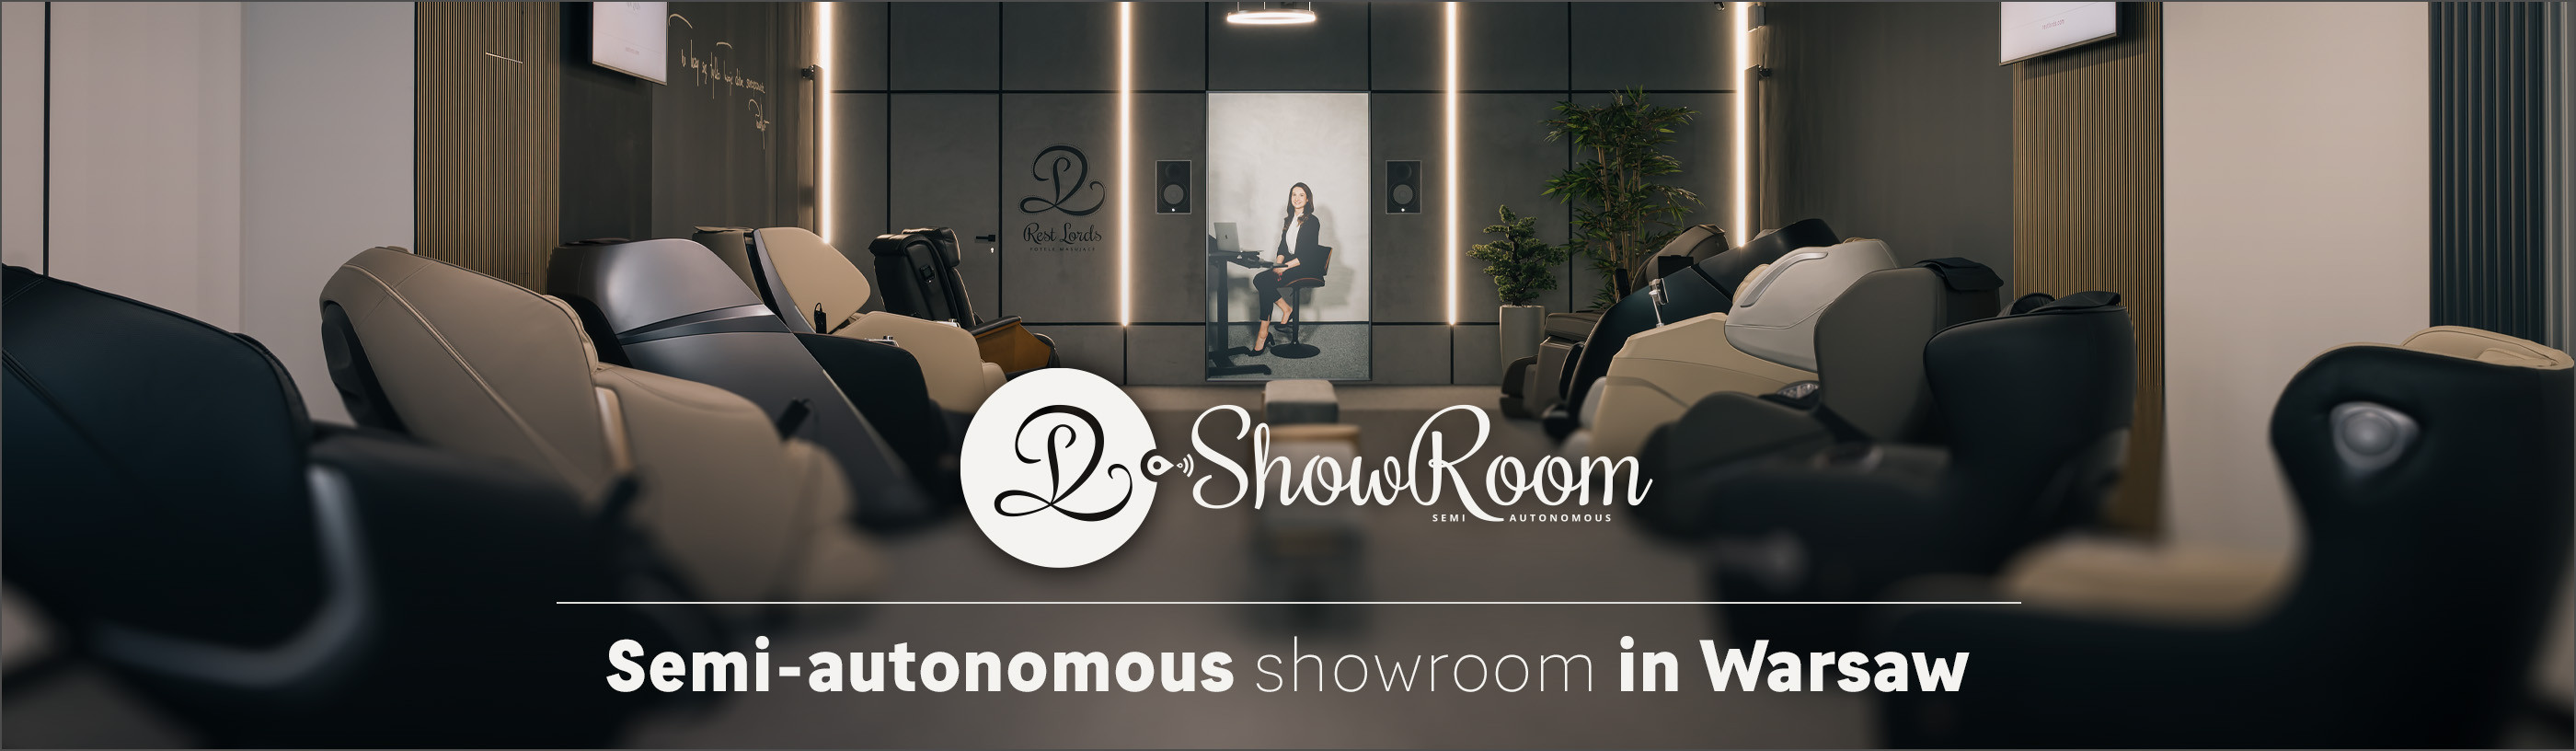 Semi-autonomous showroom in Warsaw - Rest Lords